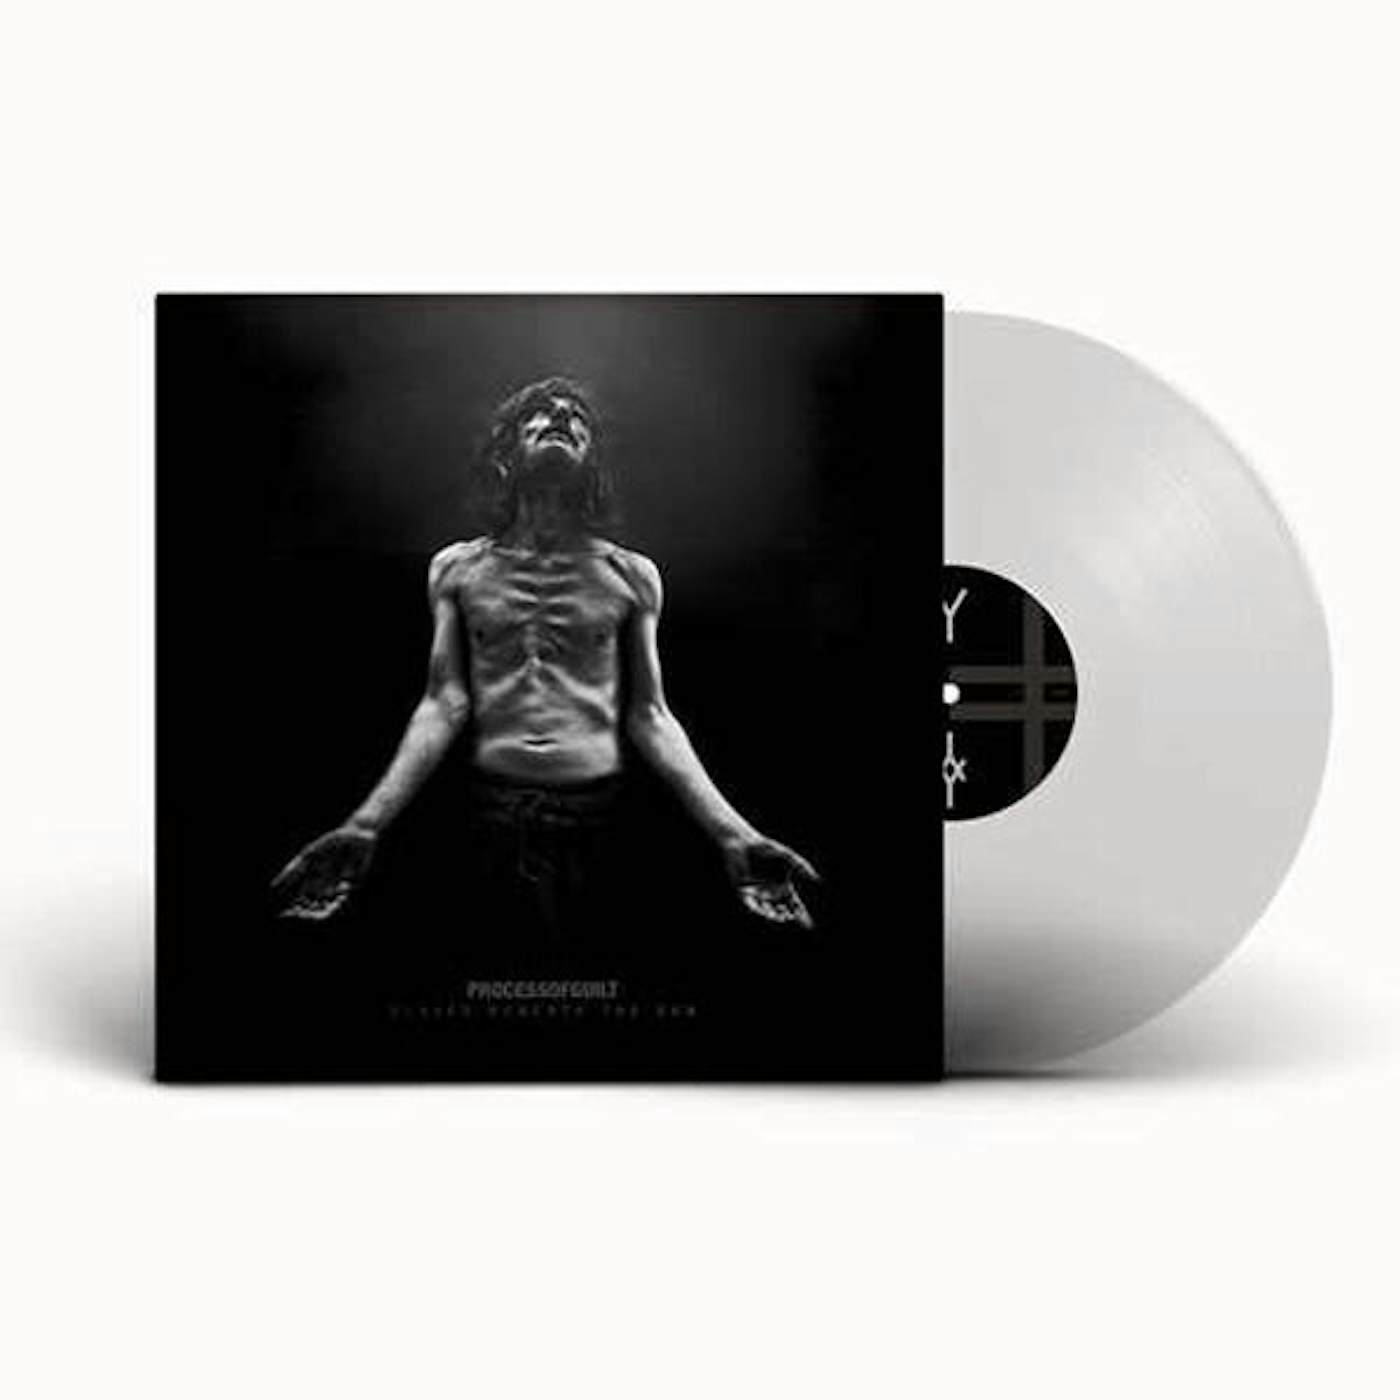 Process Of Guilt LP - Slaves Beneath The Sun (Ultra Clear Vinyl)